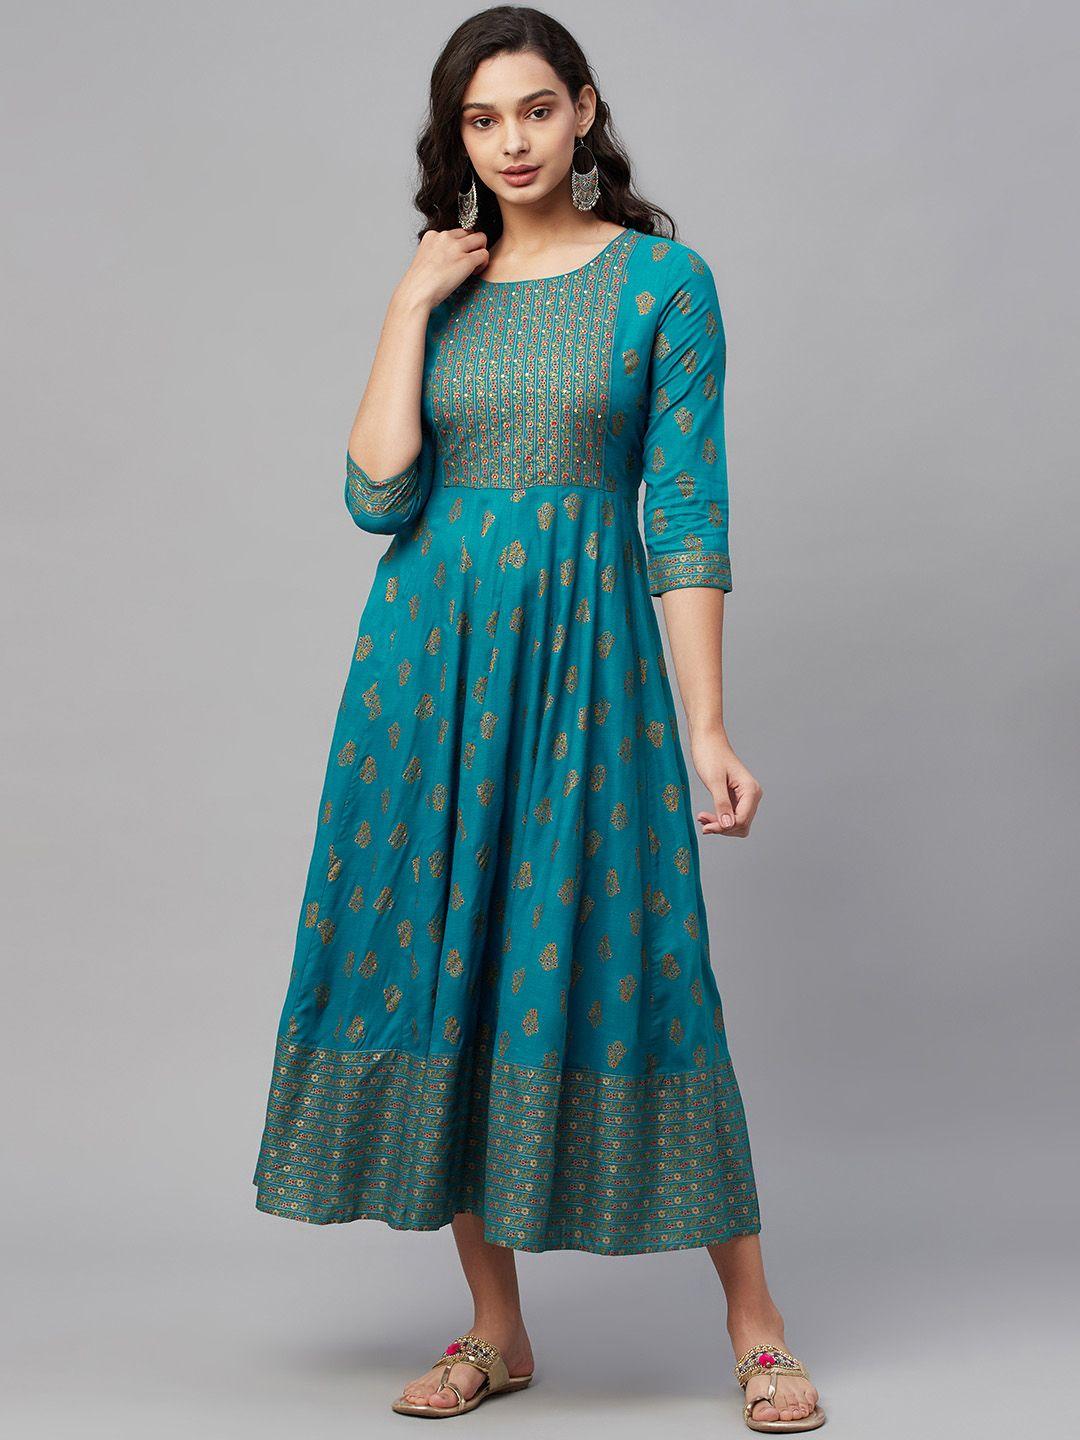 amiras-indian-ethnic-wear-teal-blue-&-golden-ethnic-motifs-ethnic-midi-dress